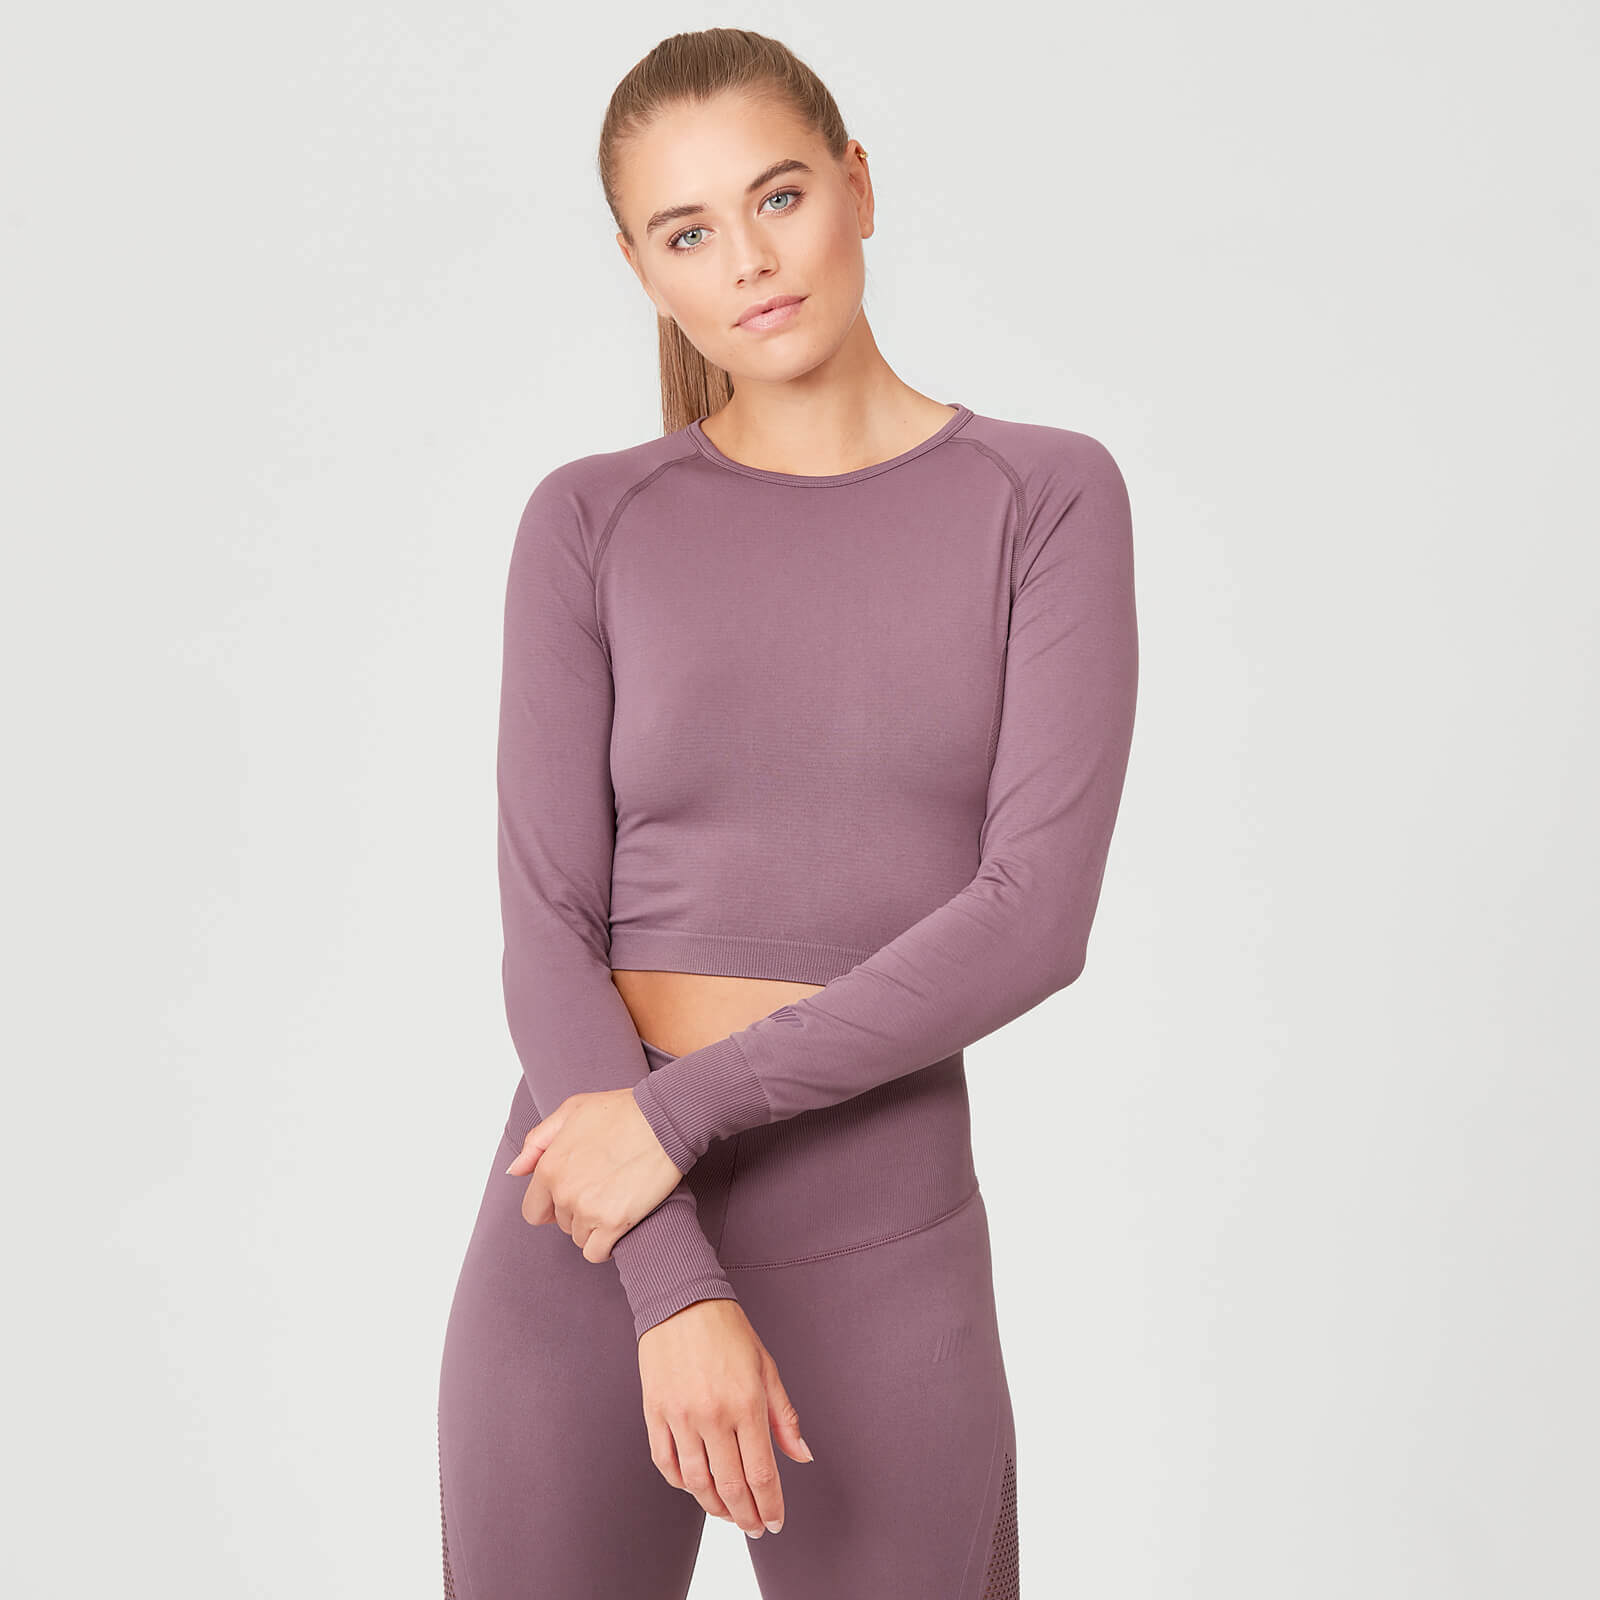 Seamless 無縫系列 女士風姿短版上衣 - 粉紫色